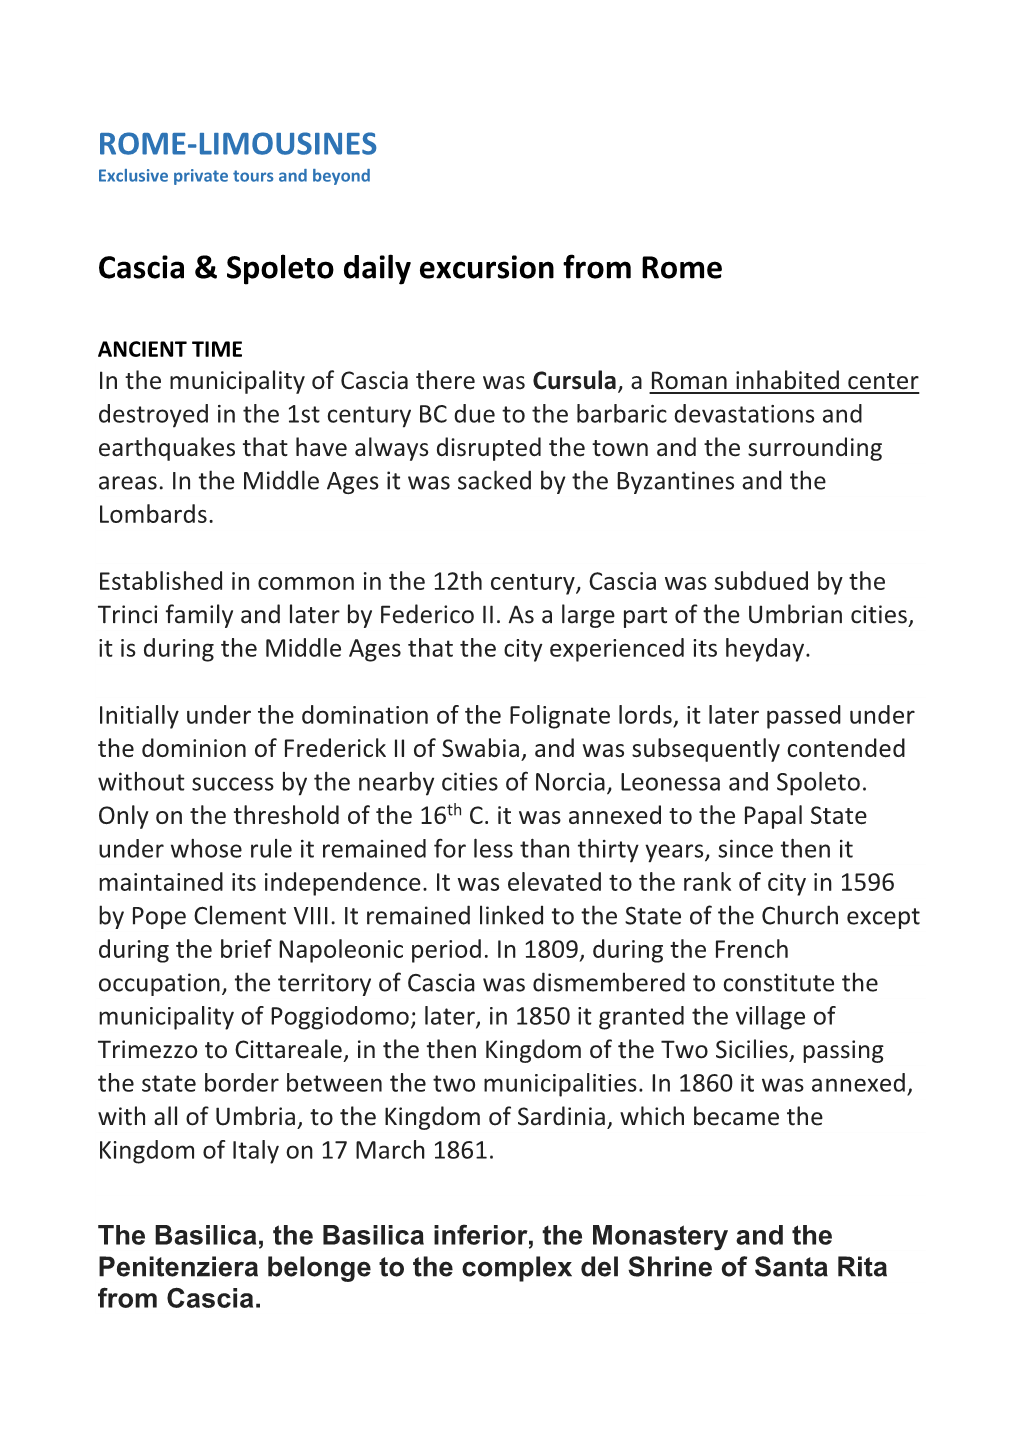 ROME-LIMOUSINES Cascia & Spoleto Daily Excursion from Rome